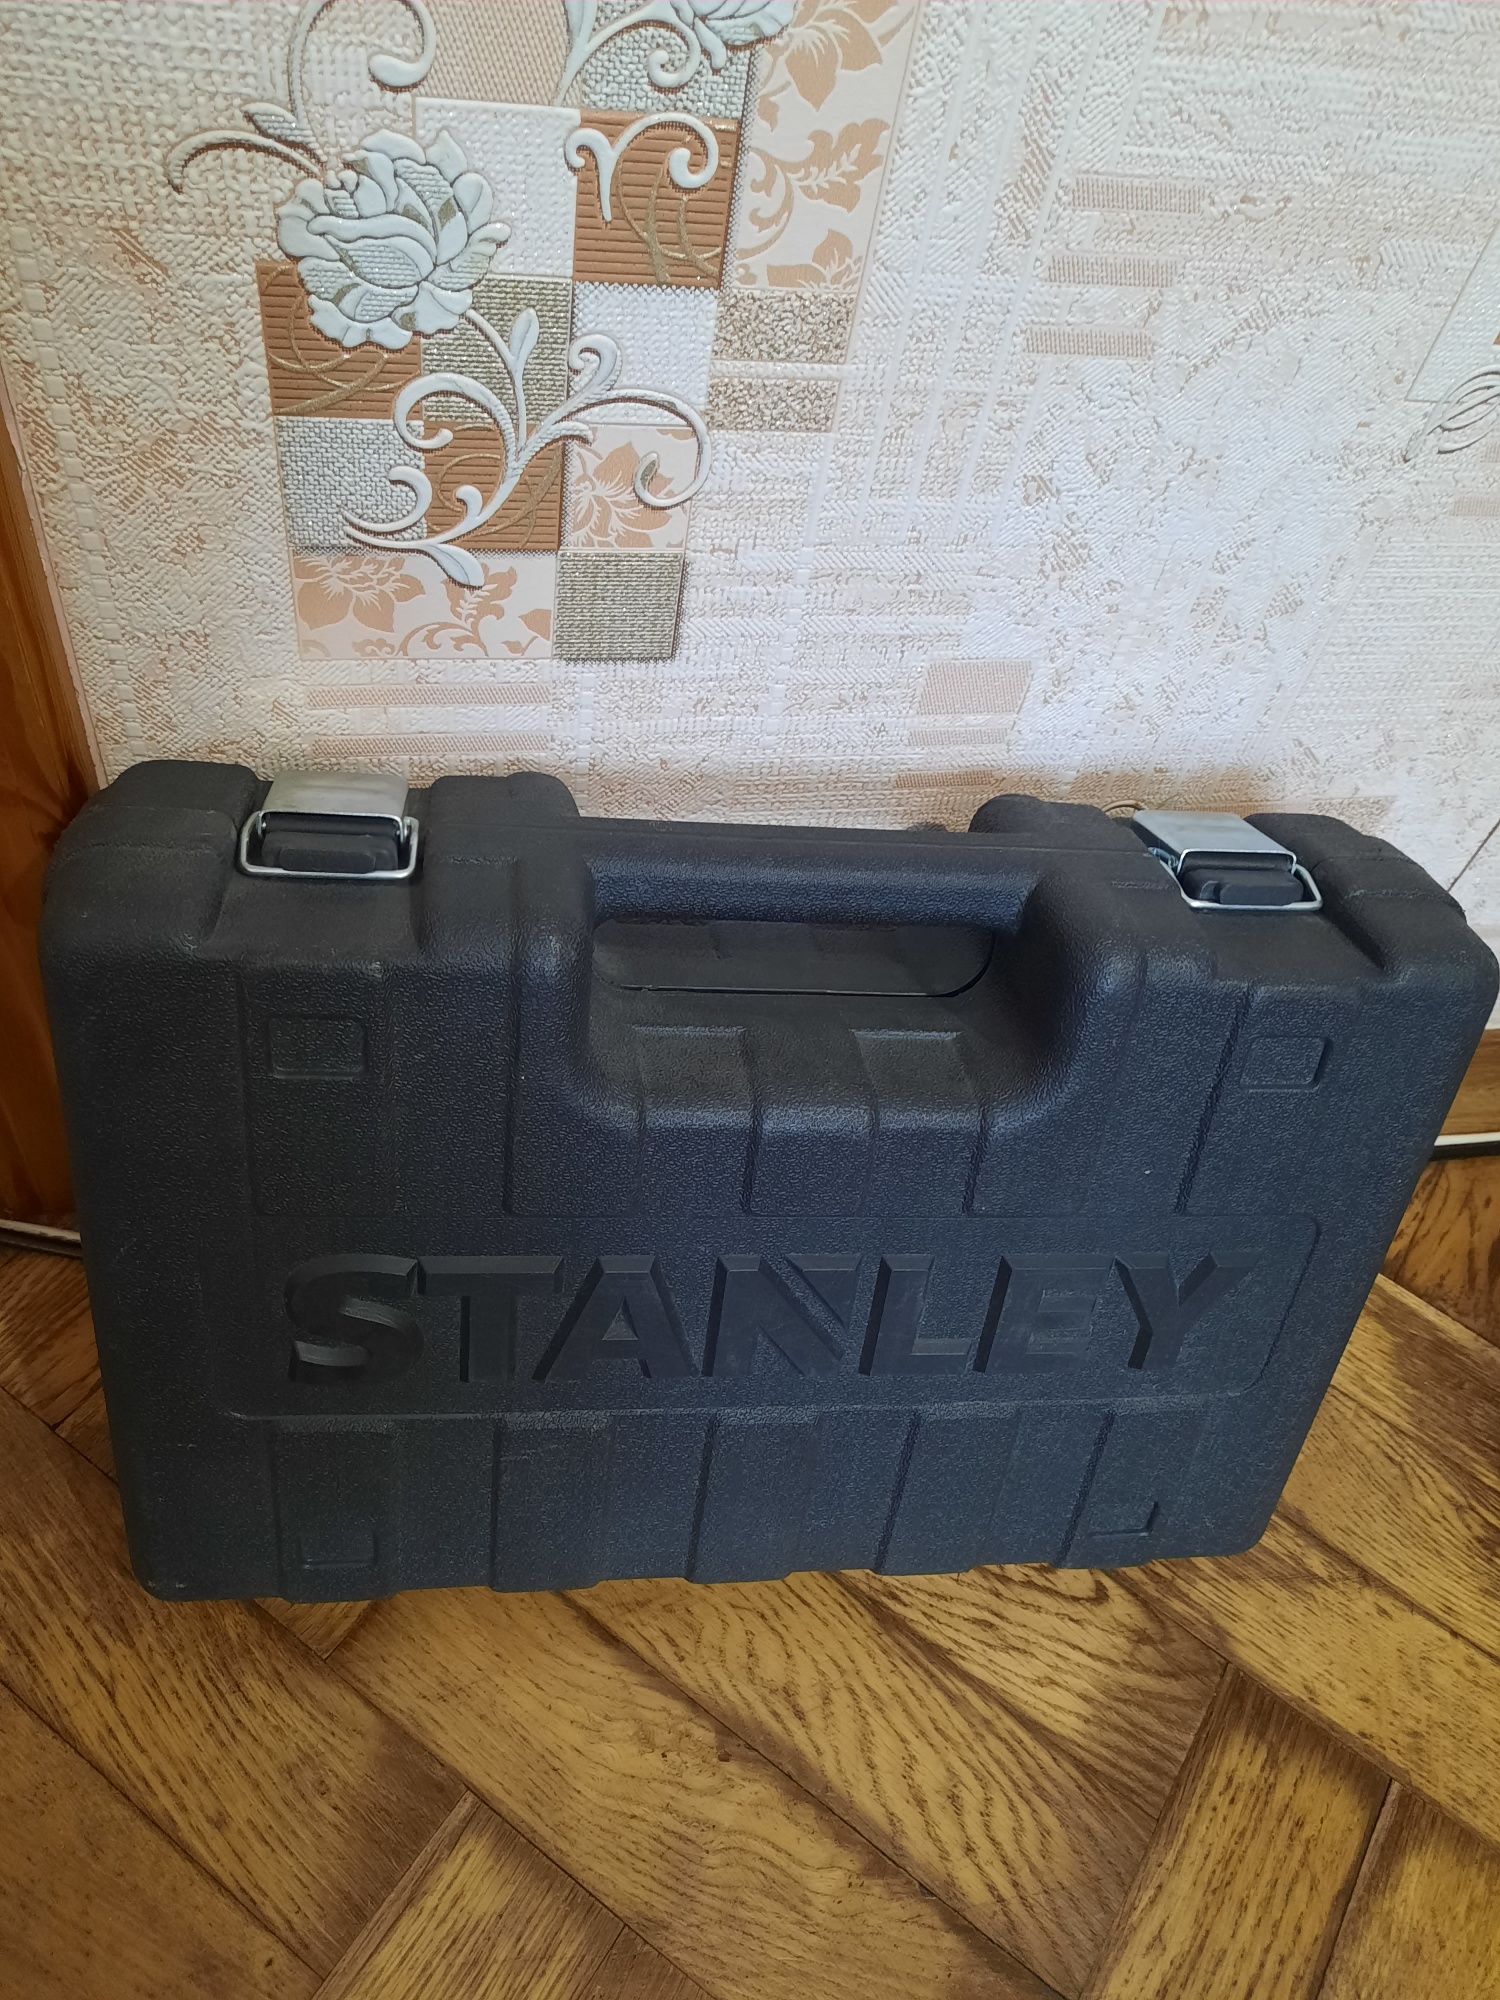 Перфоратор Stanley SHR263,800w,3.4дж